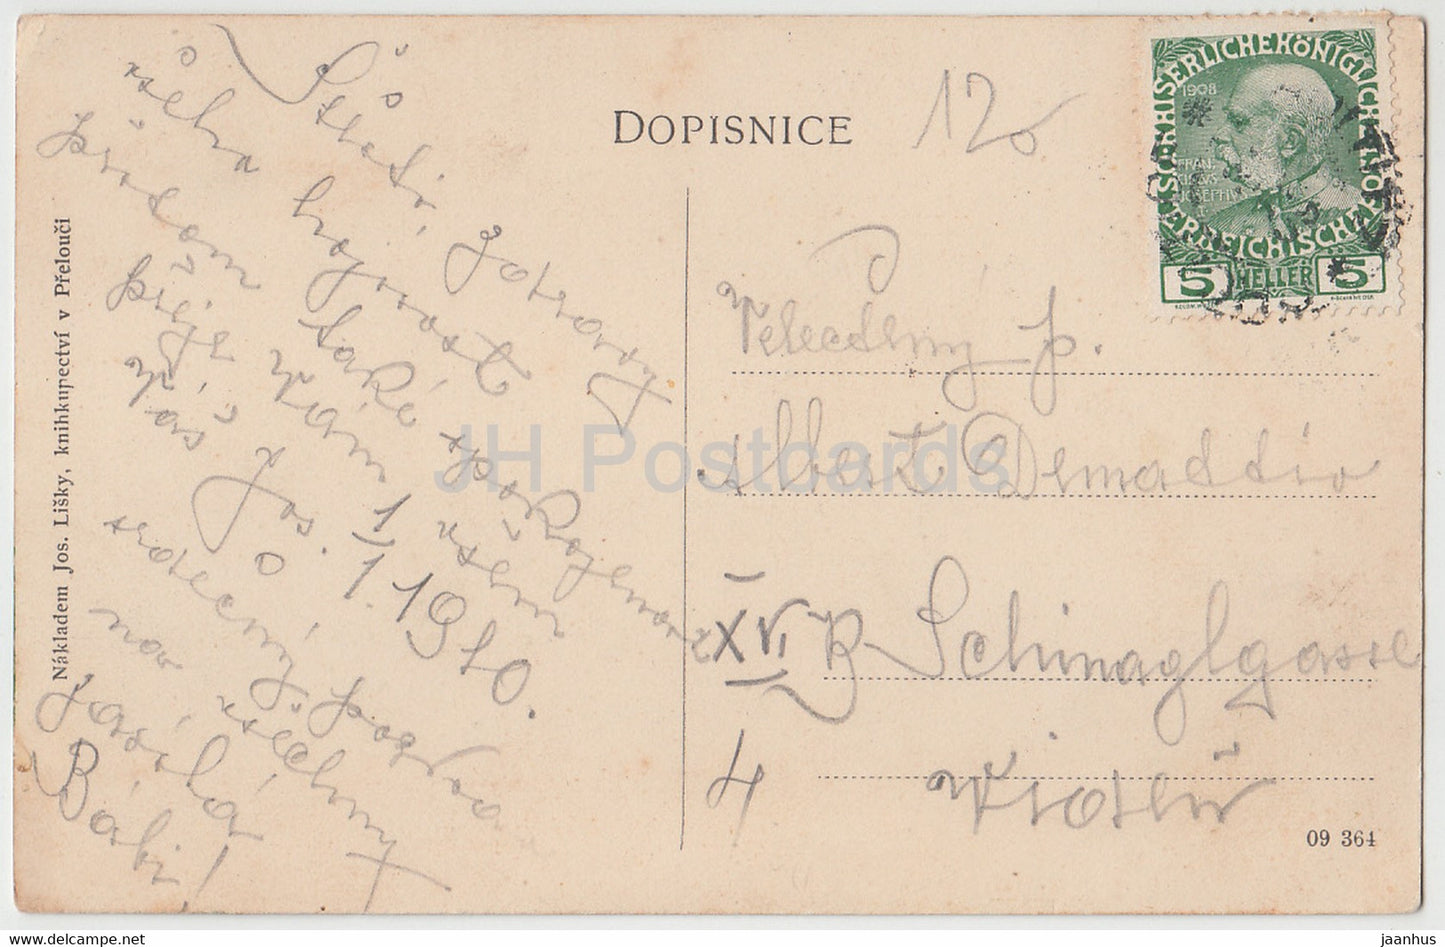 Prelouc - old postcard - 1910 - Czech Republic - used